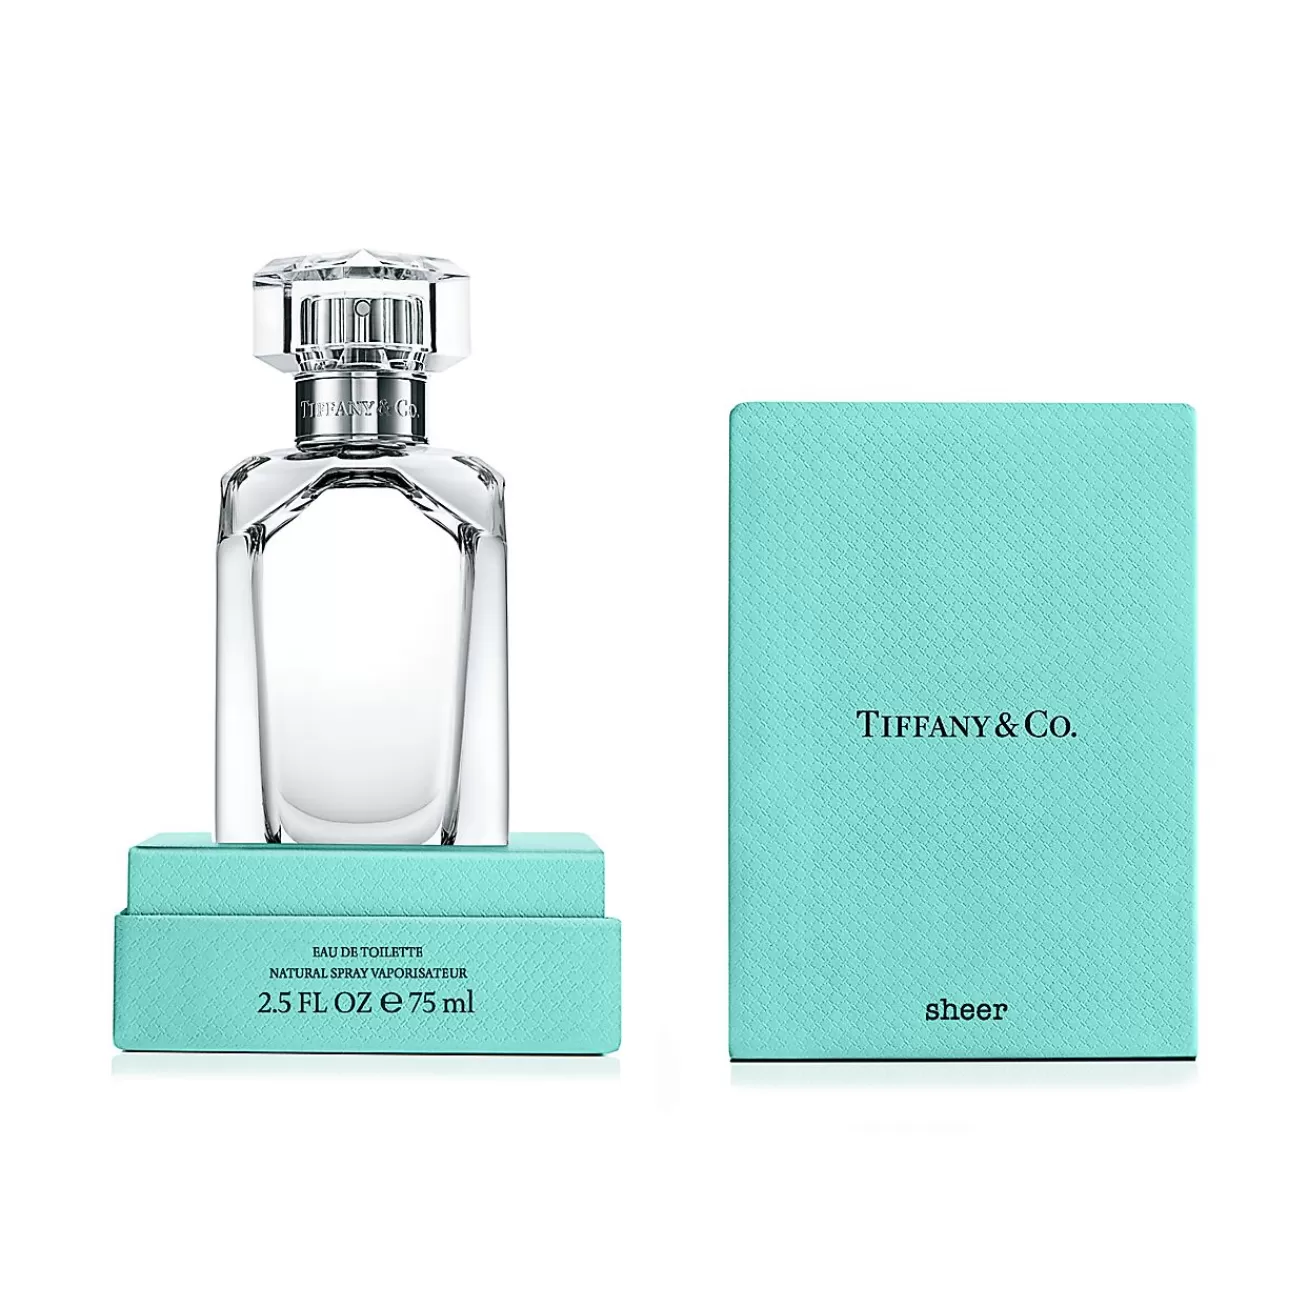 Tiffany & Co. Tiffany Sheer Eau de Toilette, 2.5 ounces. | ^ Gifts to Personalize | Tiffany Signature